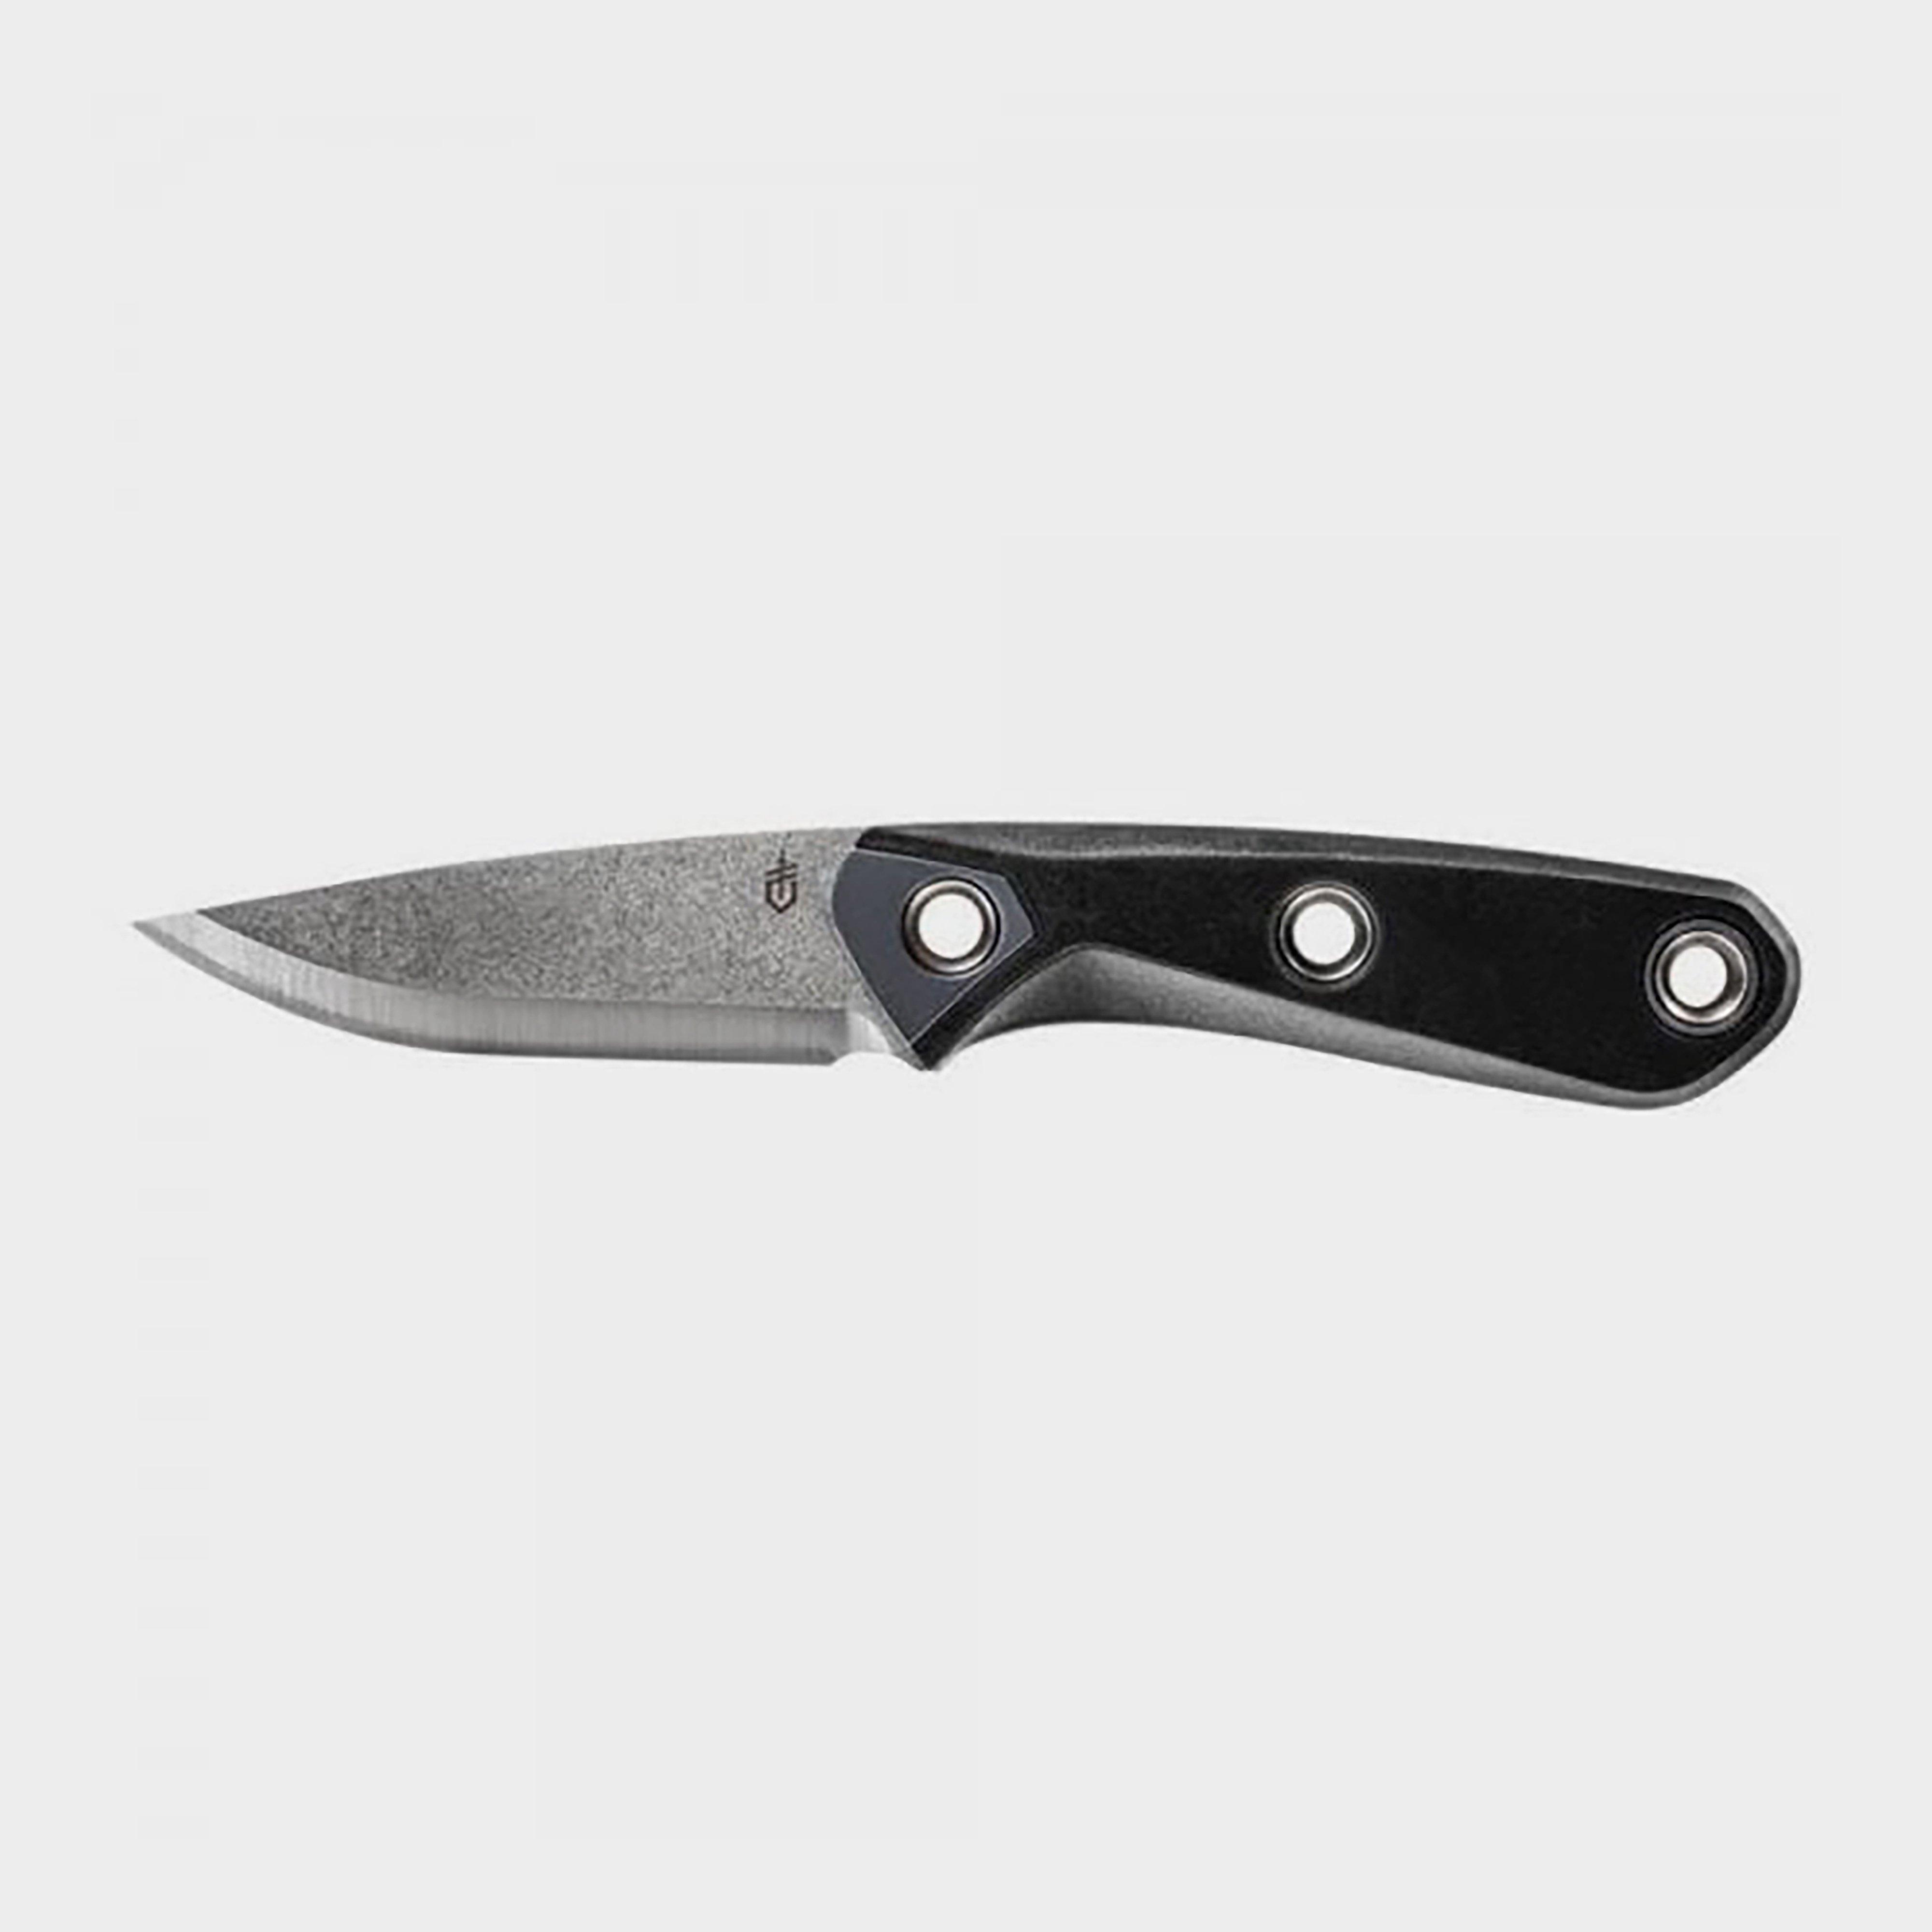 Gerber Principle Fixed Knife - Black/silver  Black/silver